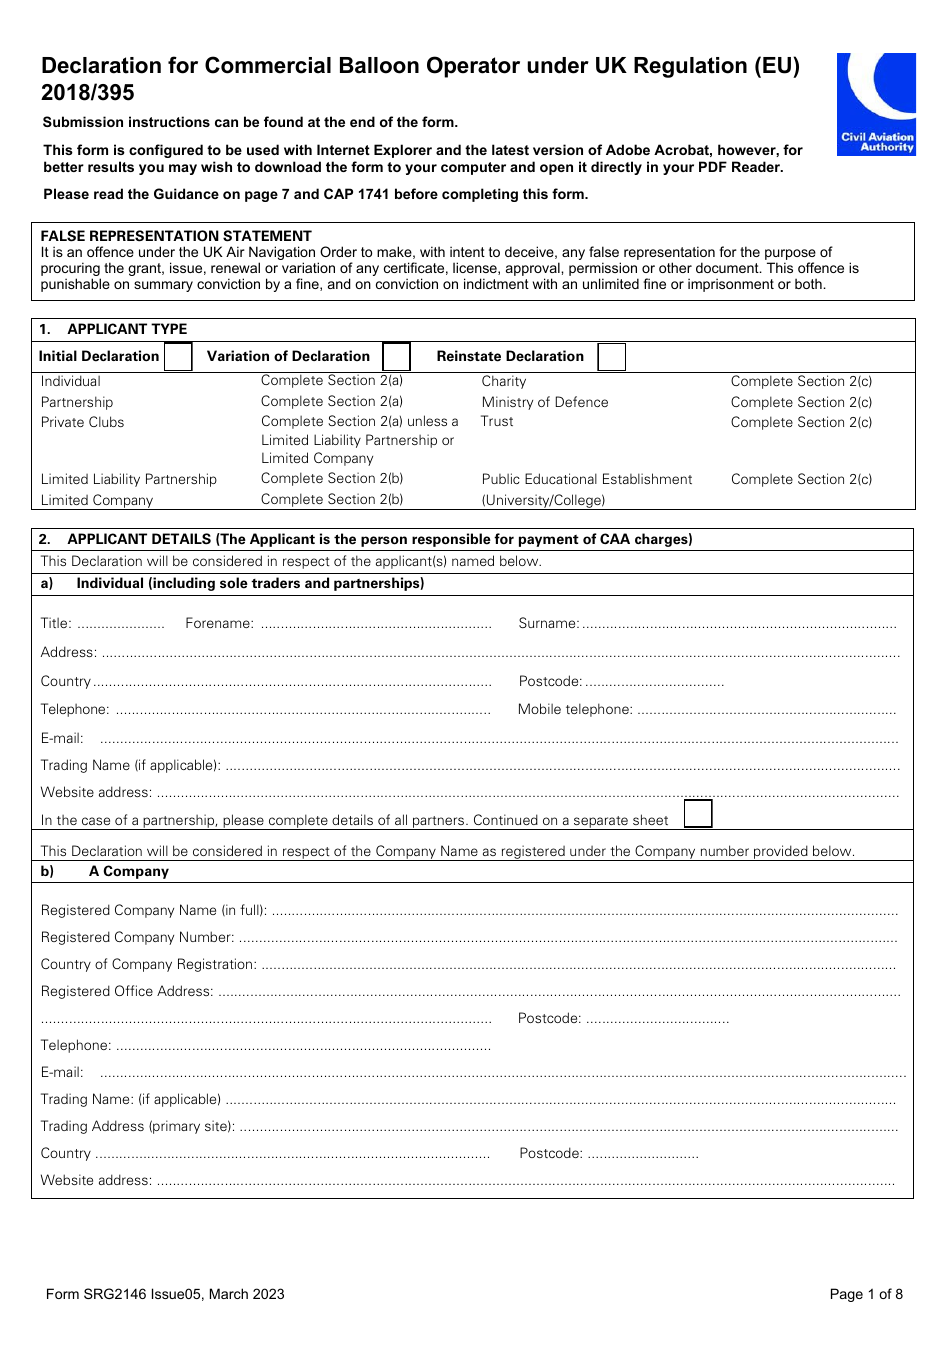 Form SRG2146 Declaration for Commercial Balloon Operator Under UK Regulation (Eu) 2018 / 395 - United Kingdom, Page 1